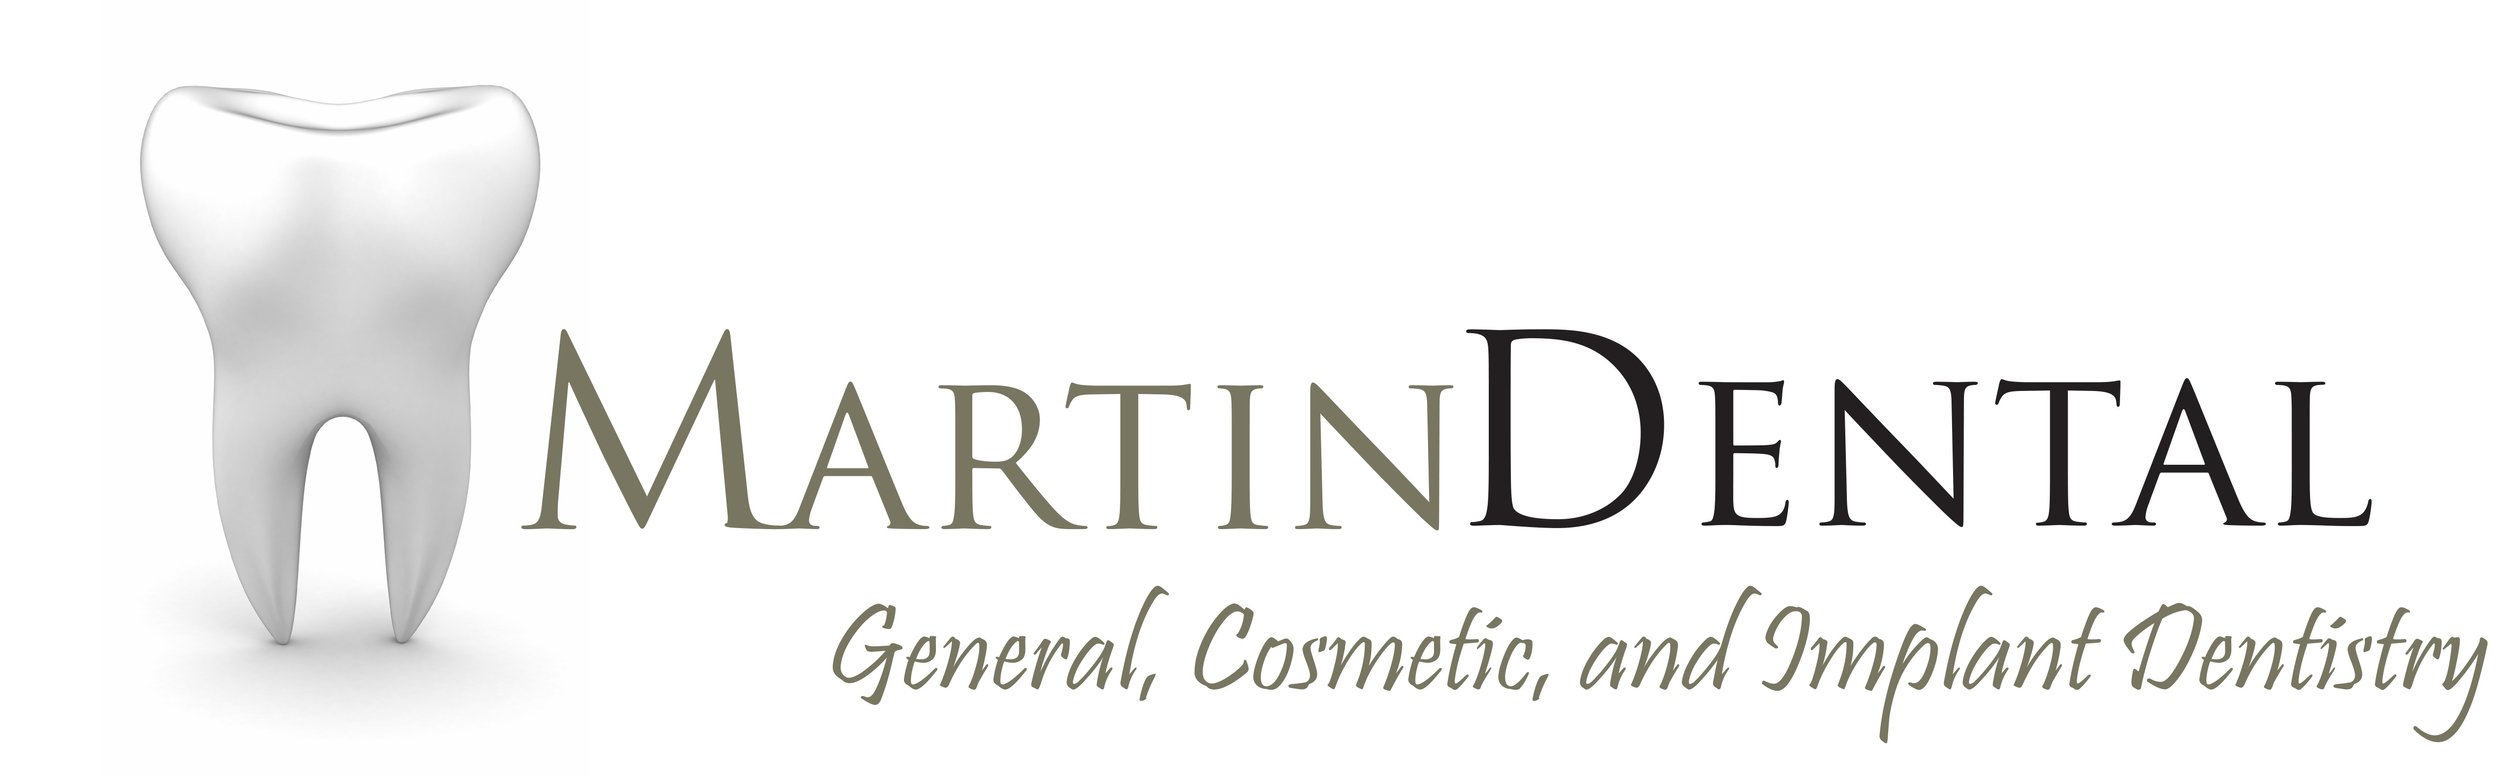 Martin Dental Logo (1).jpg